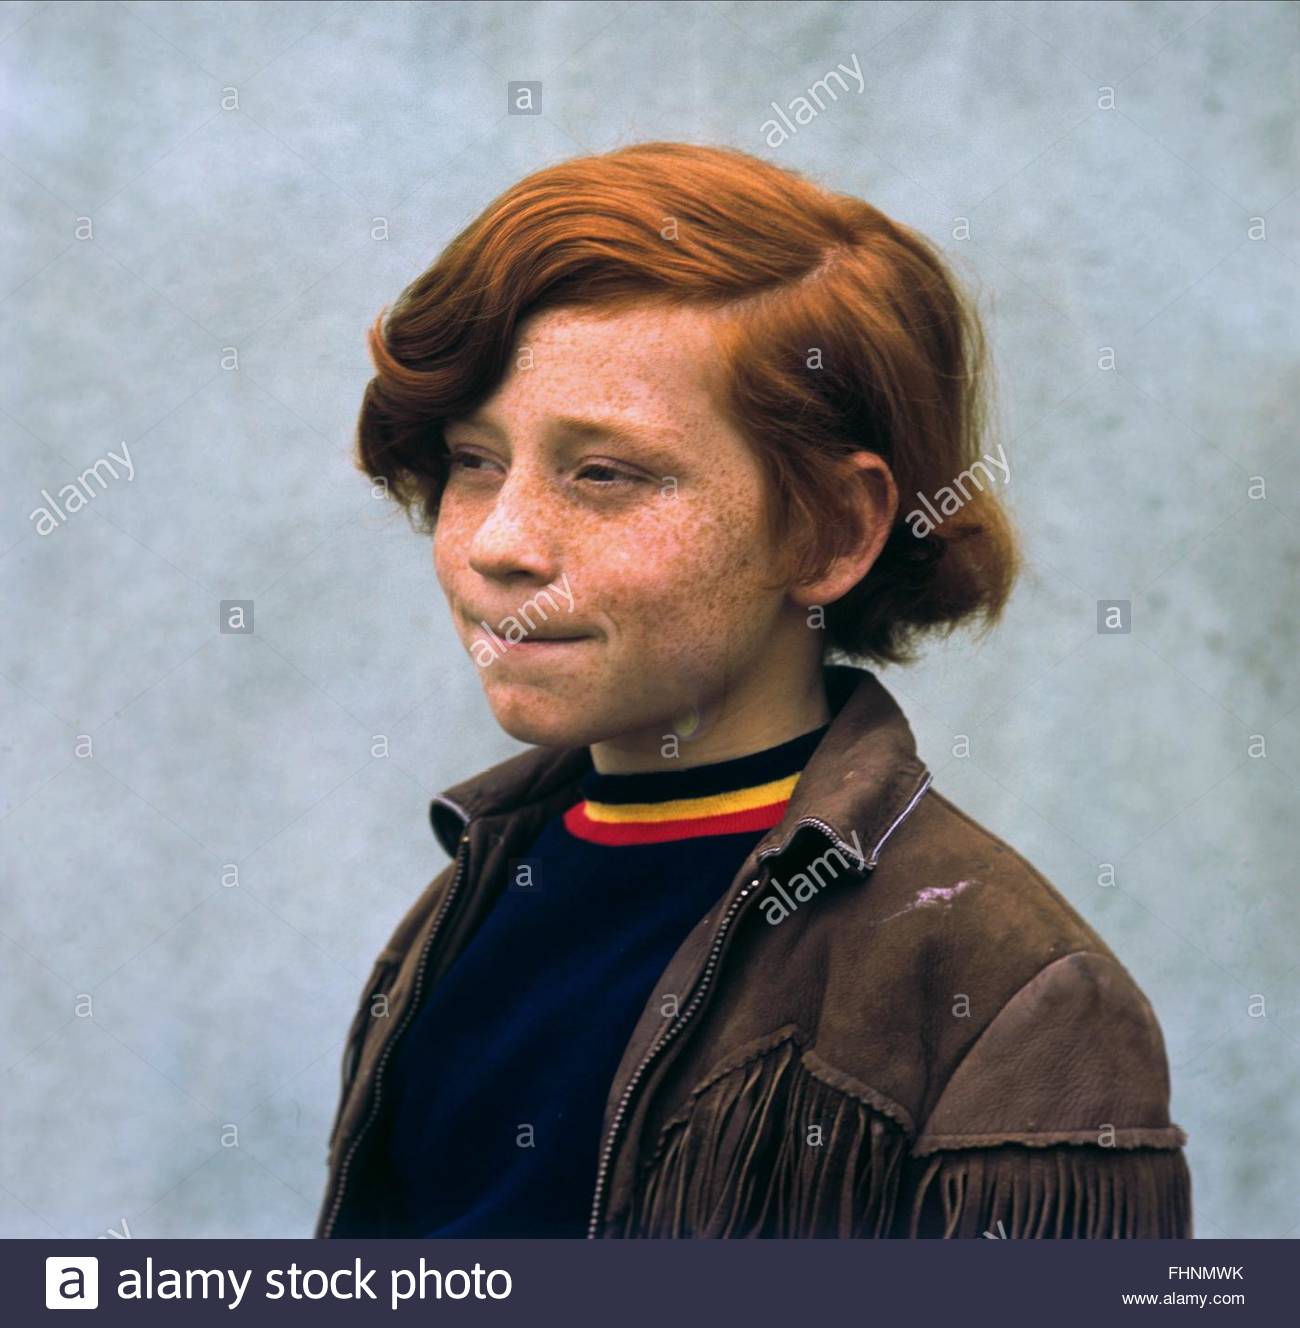 Personagem Franklin Worthinson - Página 3 Danny-bonaduce-the-partridge-family-1970-FHNMWK